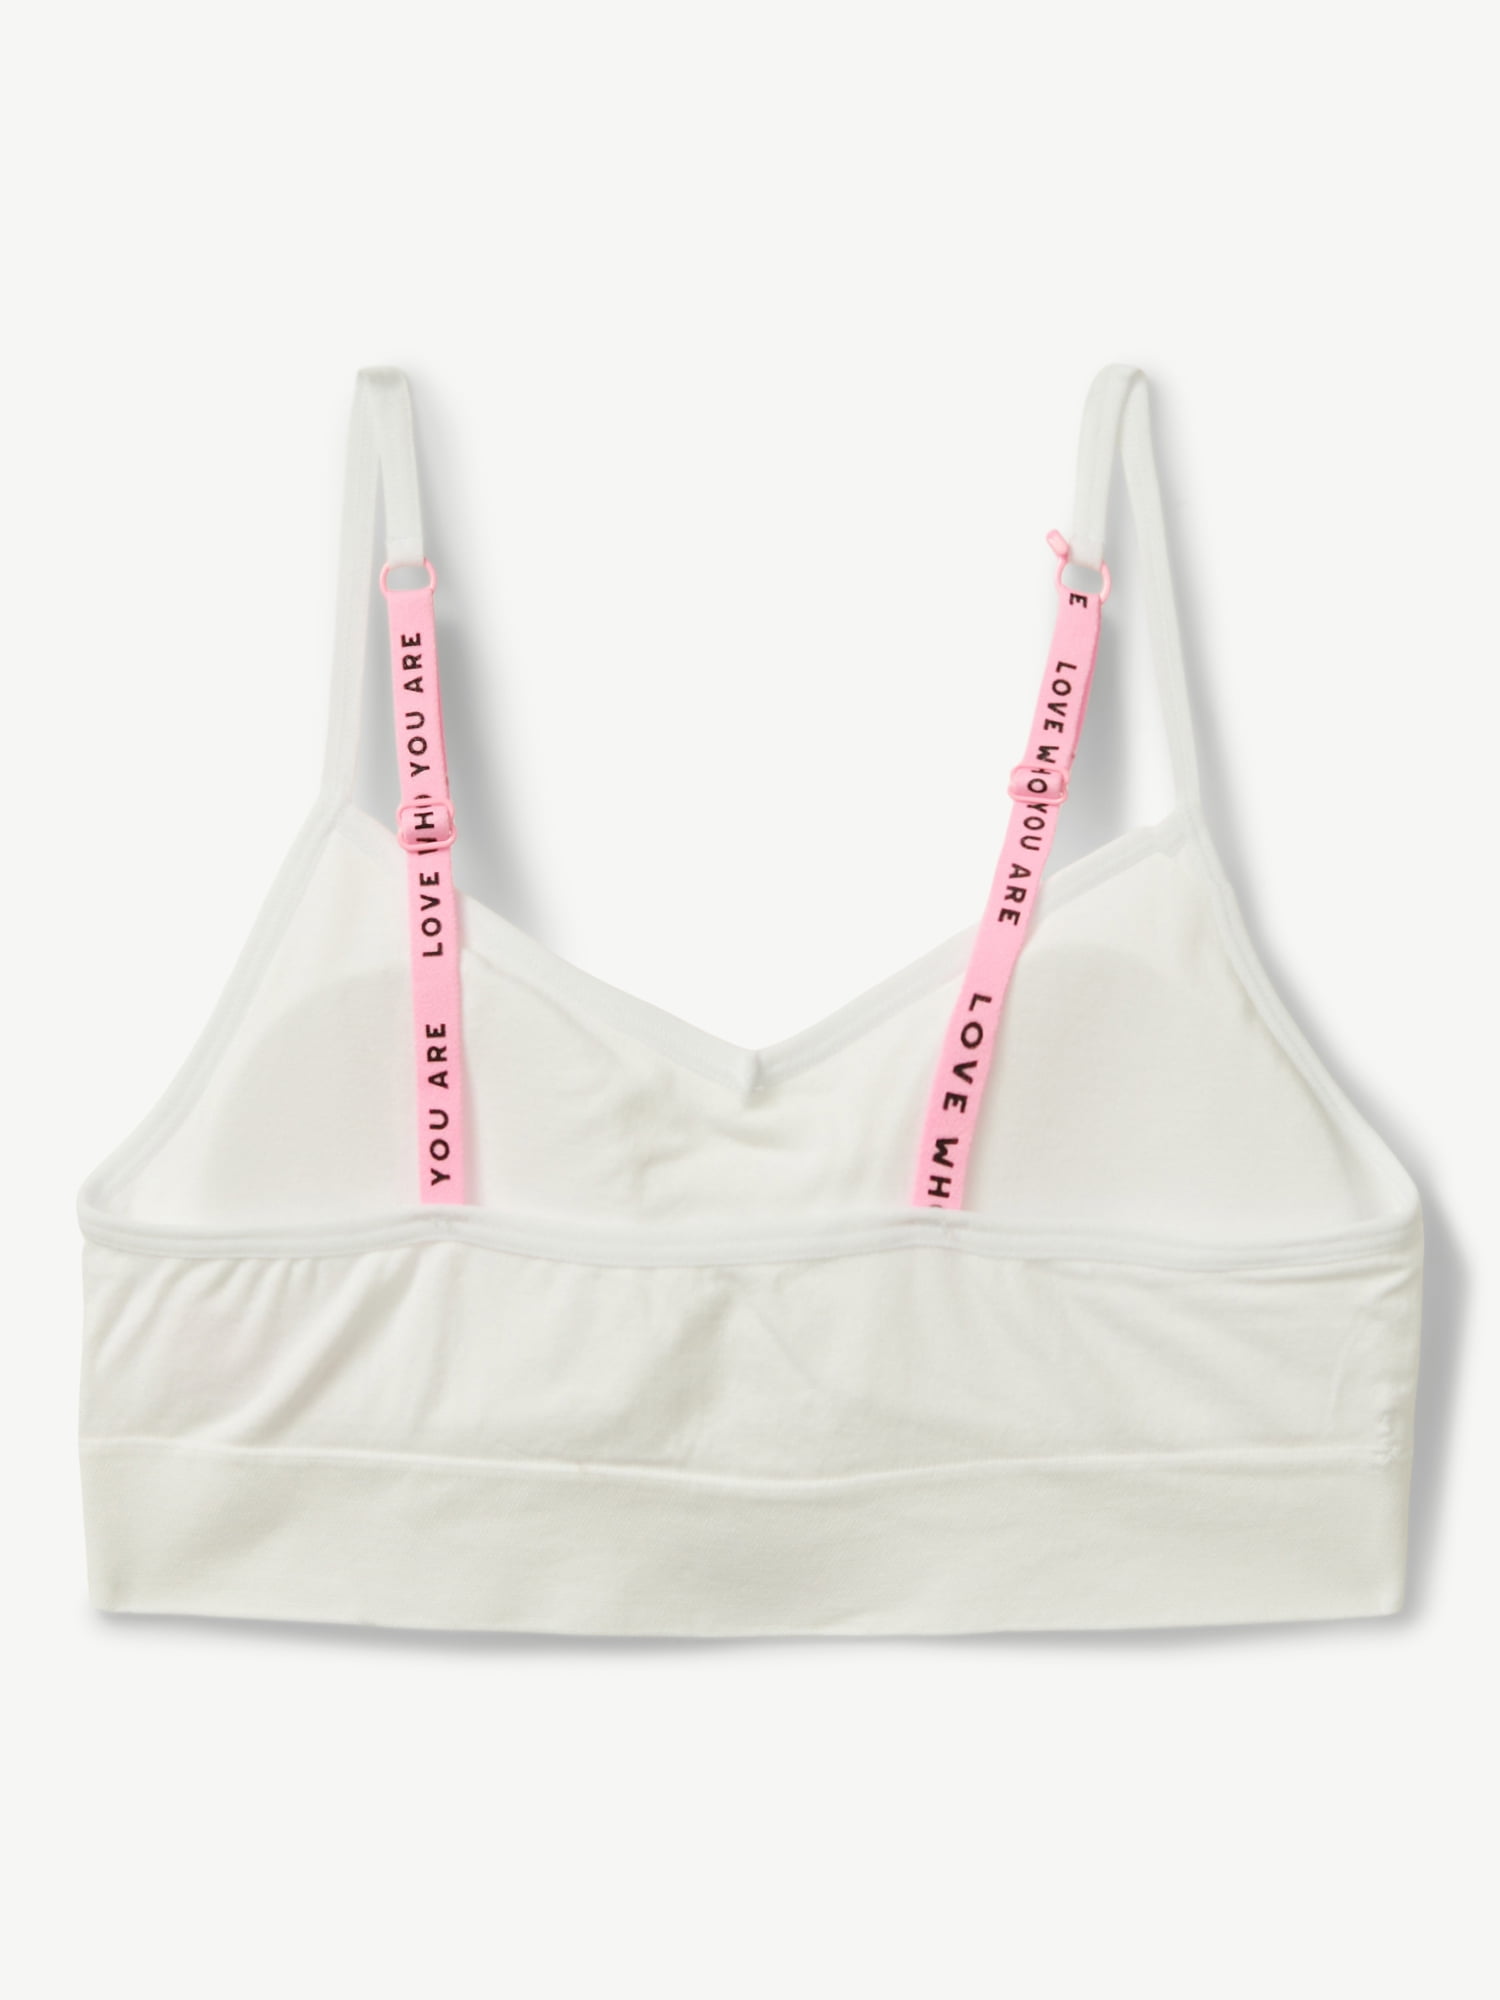 Girls justice logo convertible bra size 30 new white 